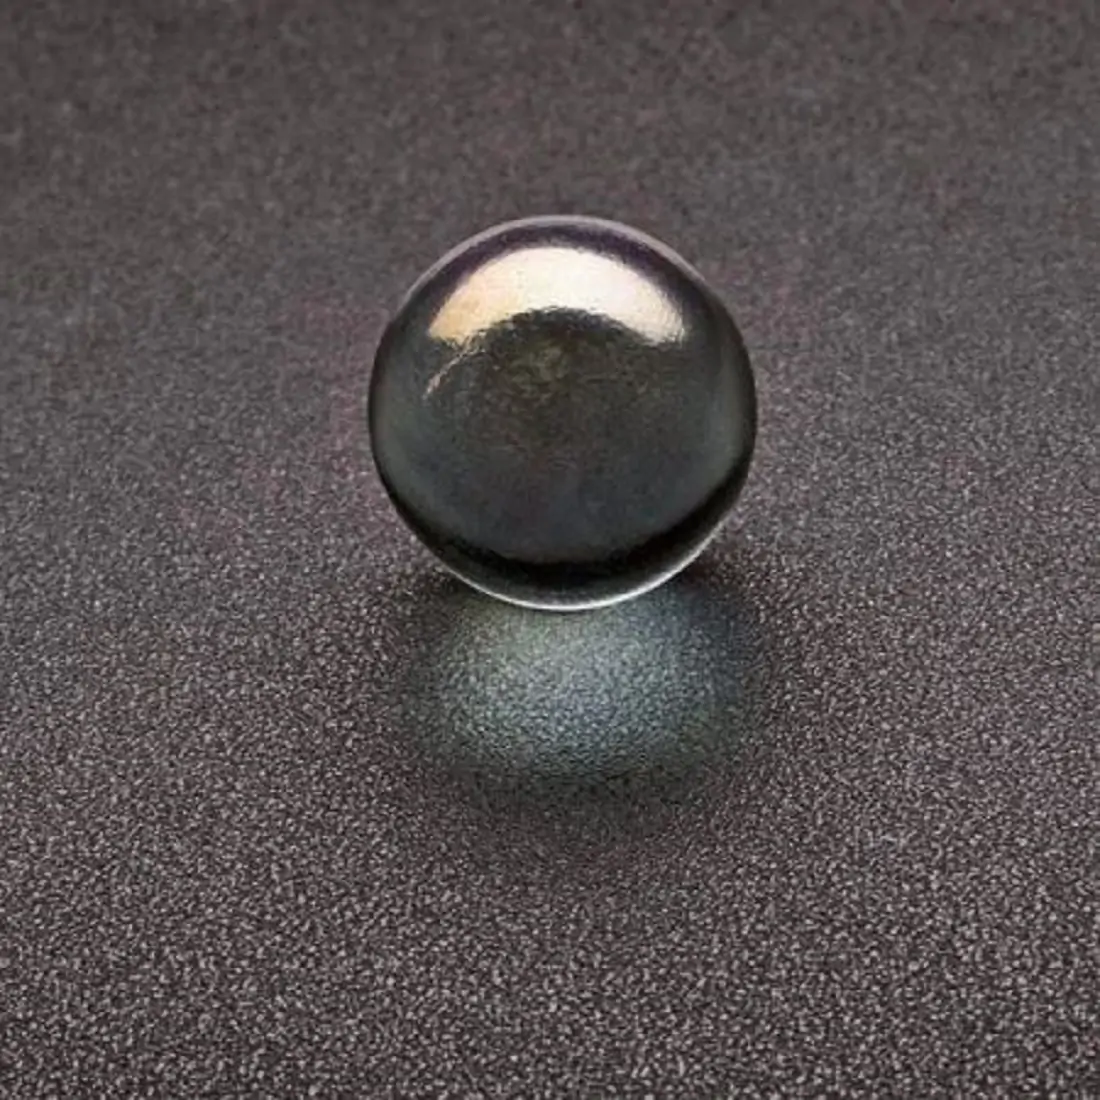 A black circular ball with a glare 